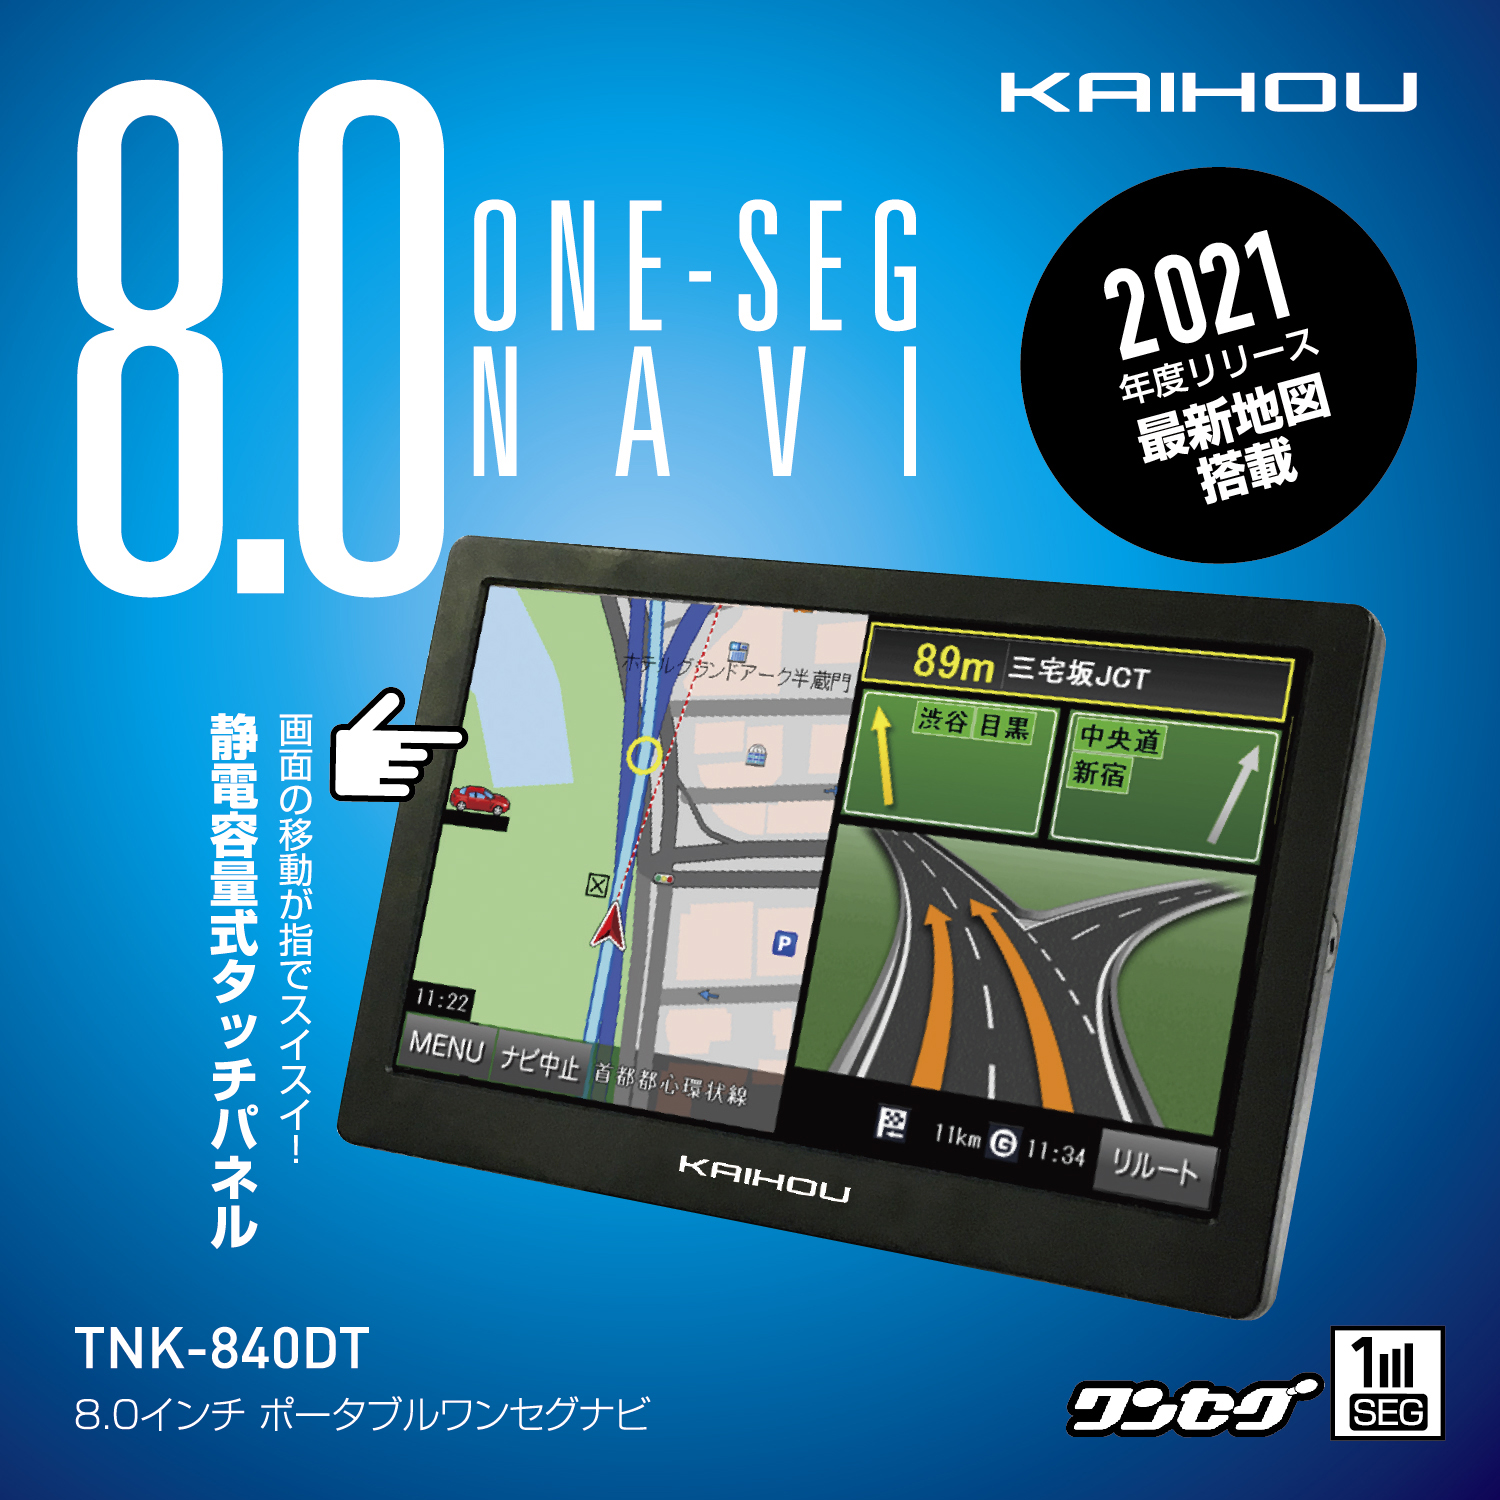 TNK-840DT | カイホウジャパン